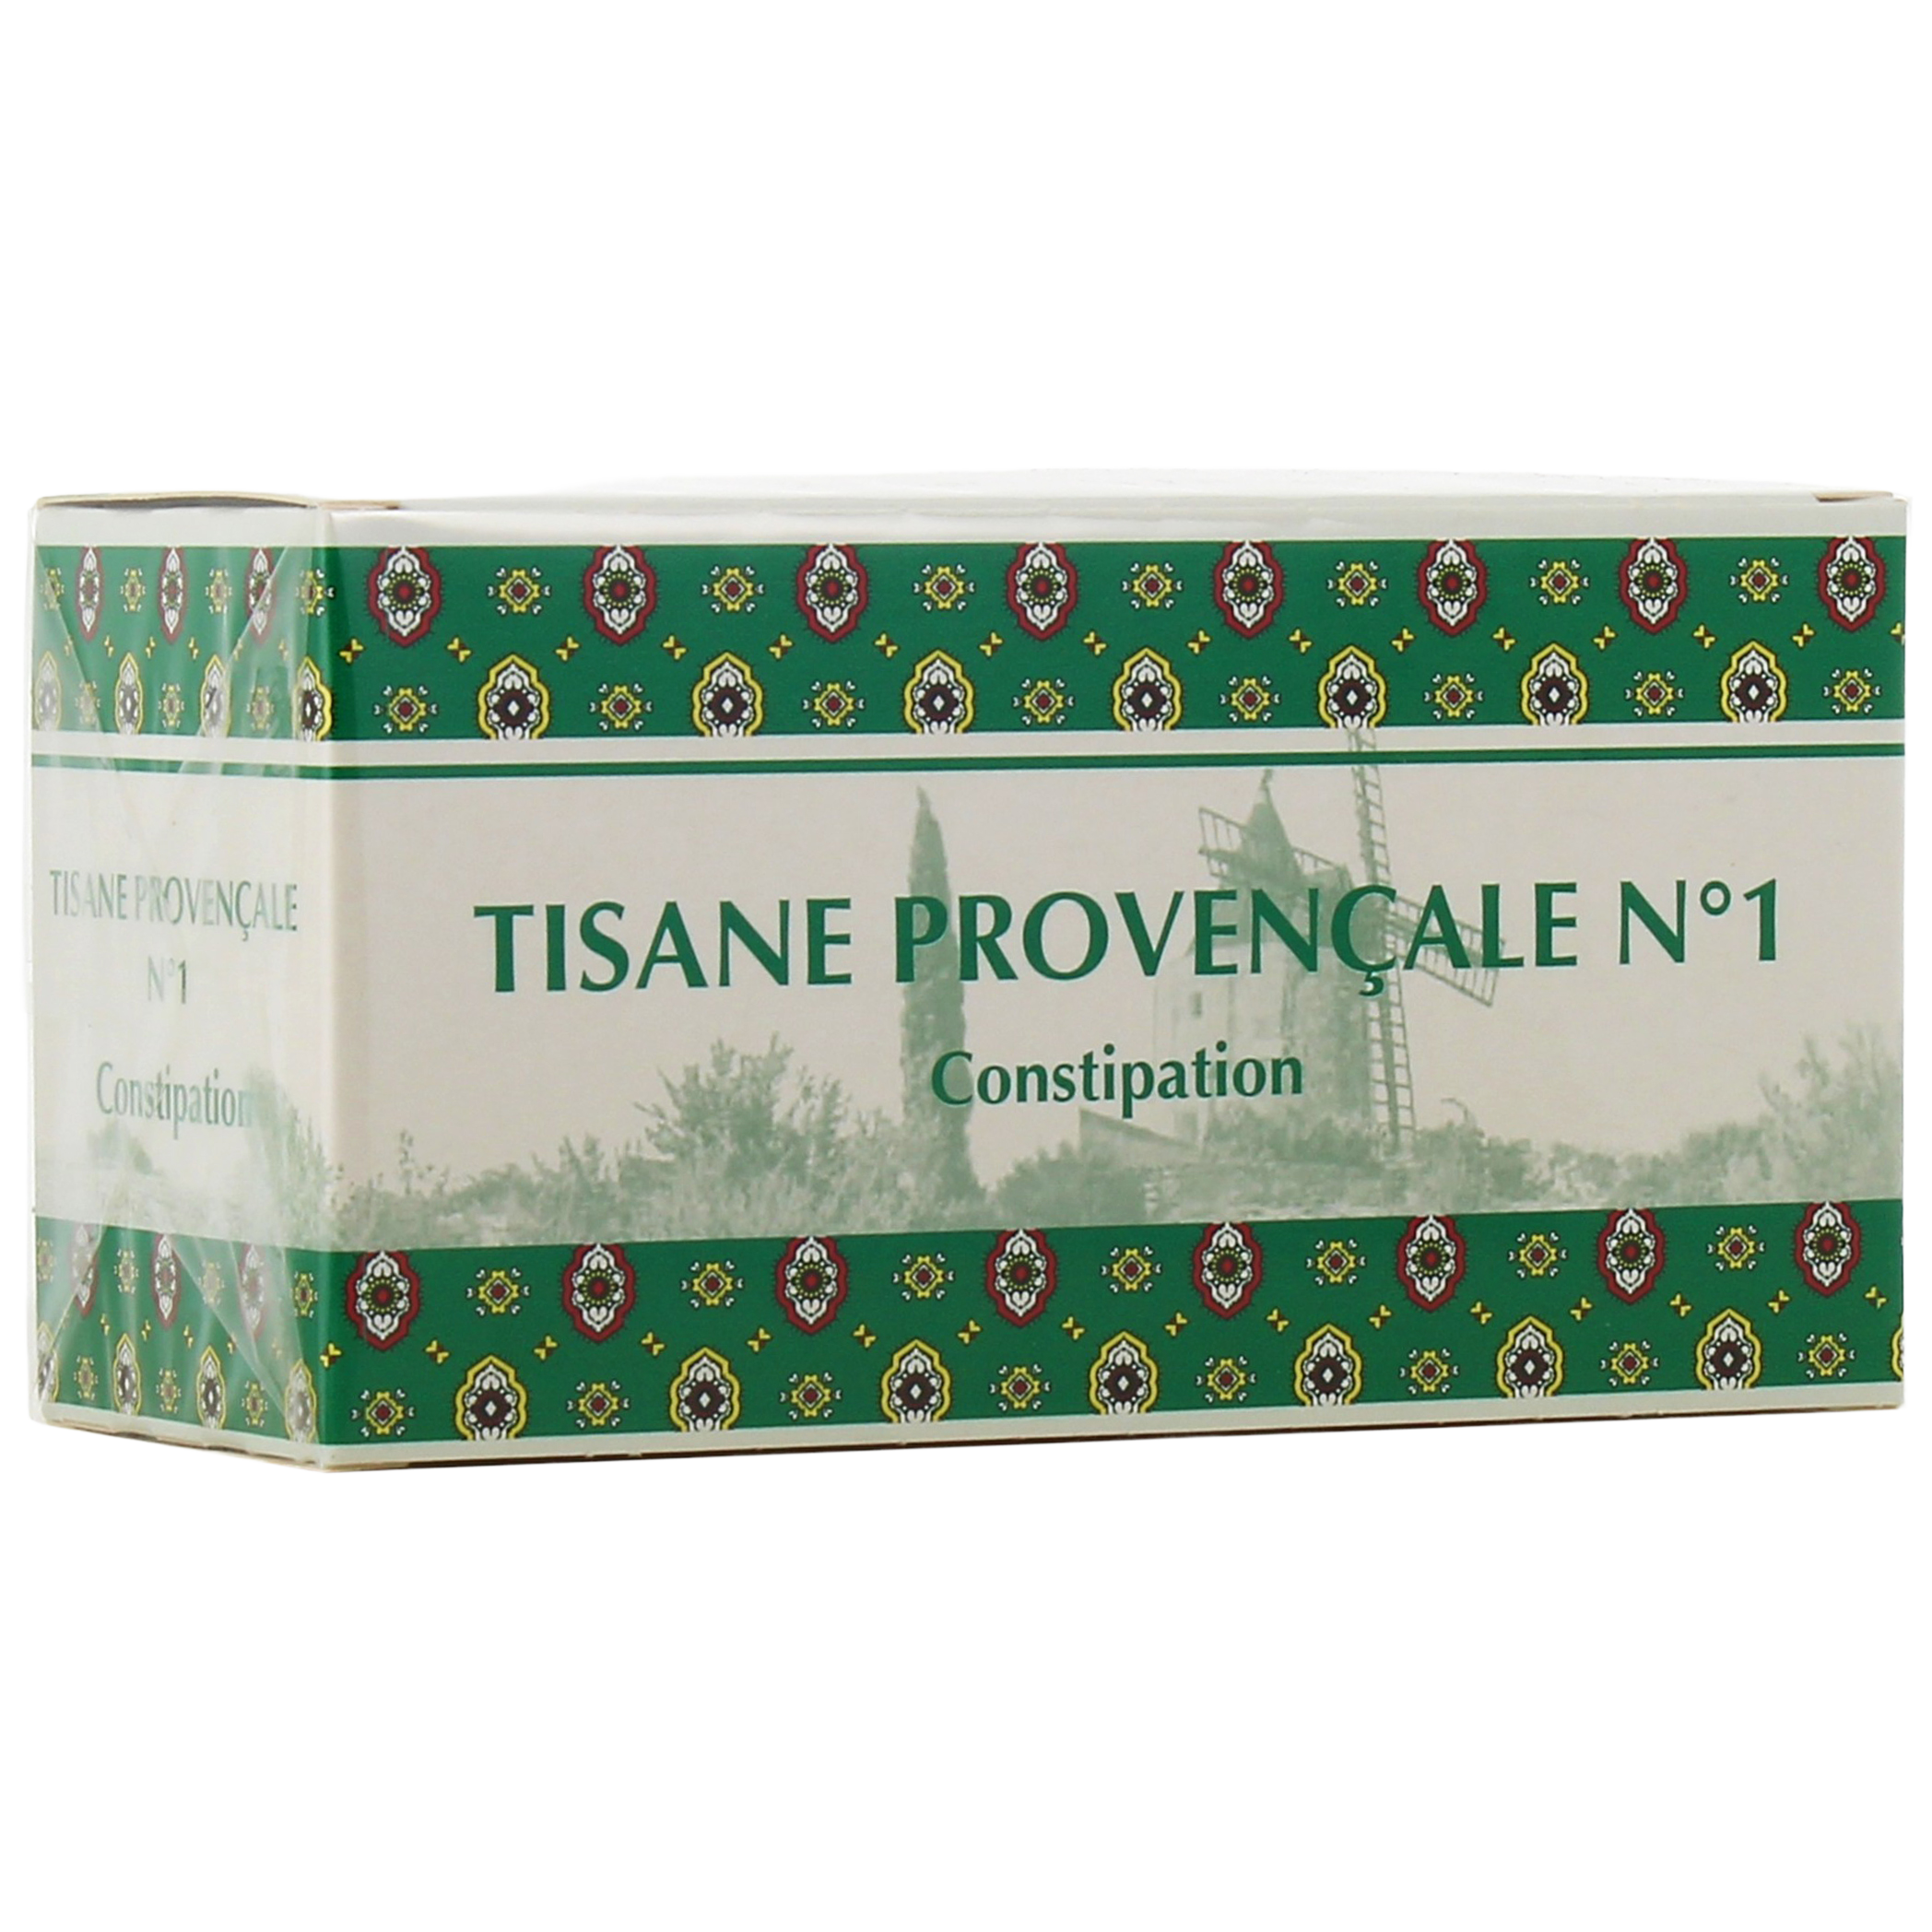 Tisane provençale n°1 constipation - 24 sachets